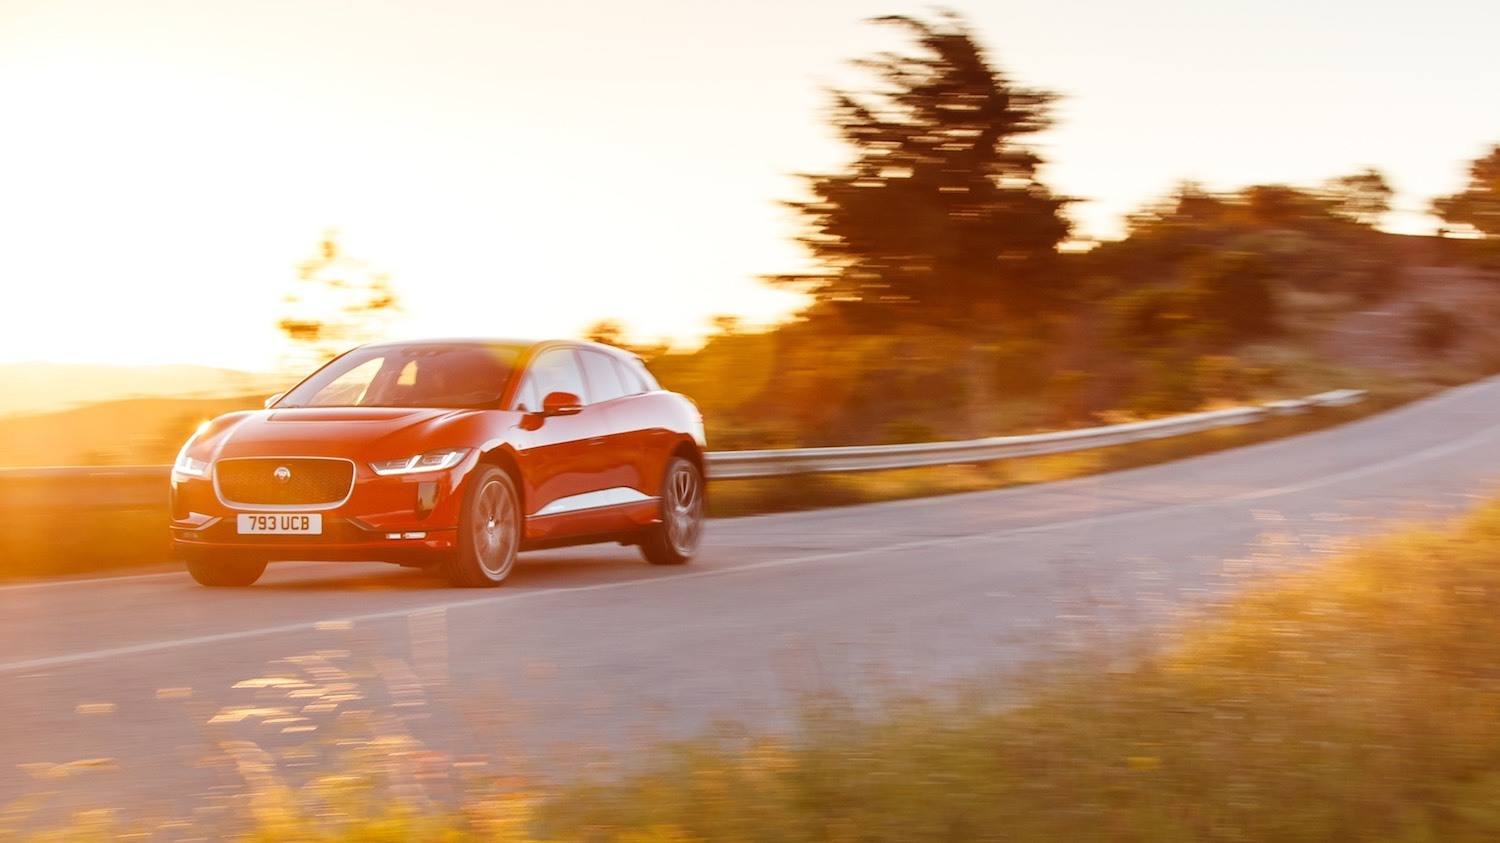 Neil Lyndon reviews the 2018 All-New Jaguar I-Pace Premium Electric SUV 4